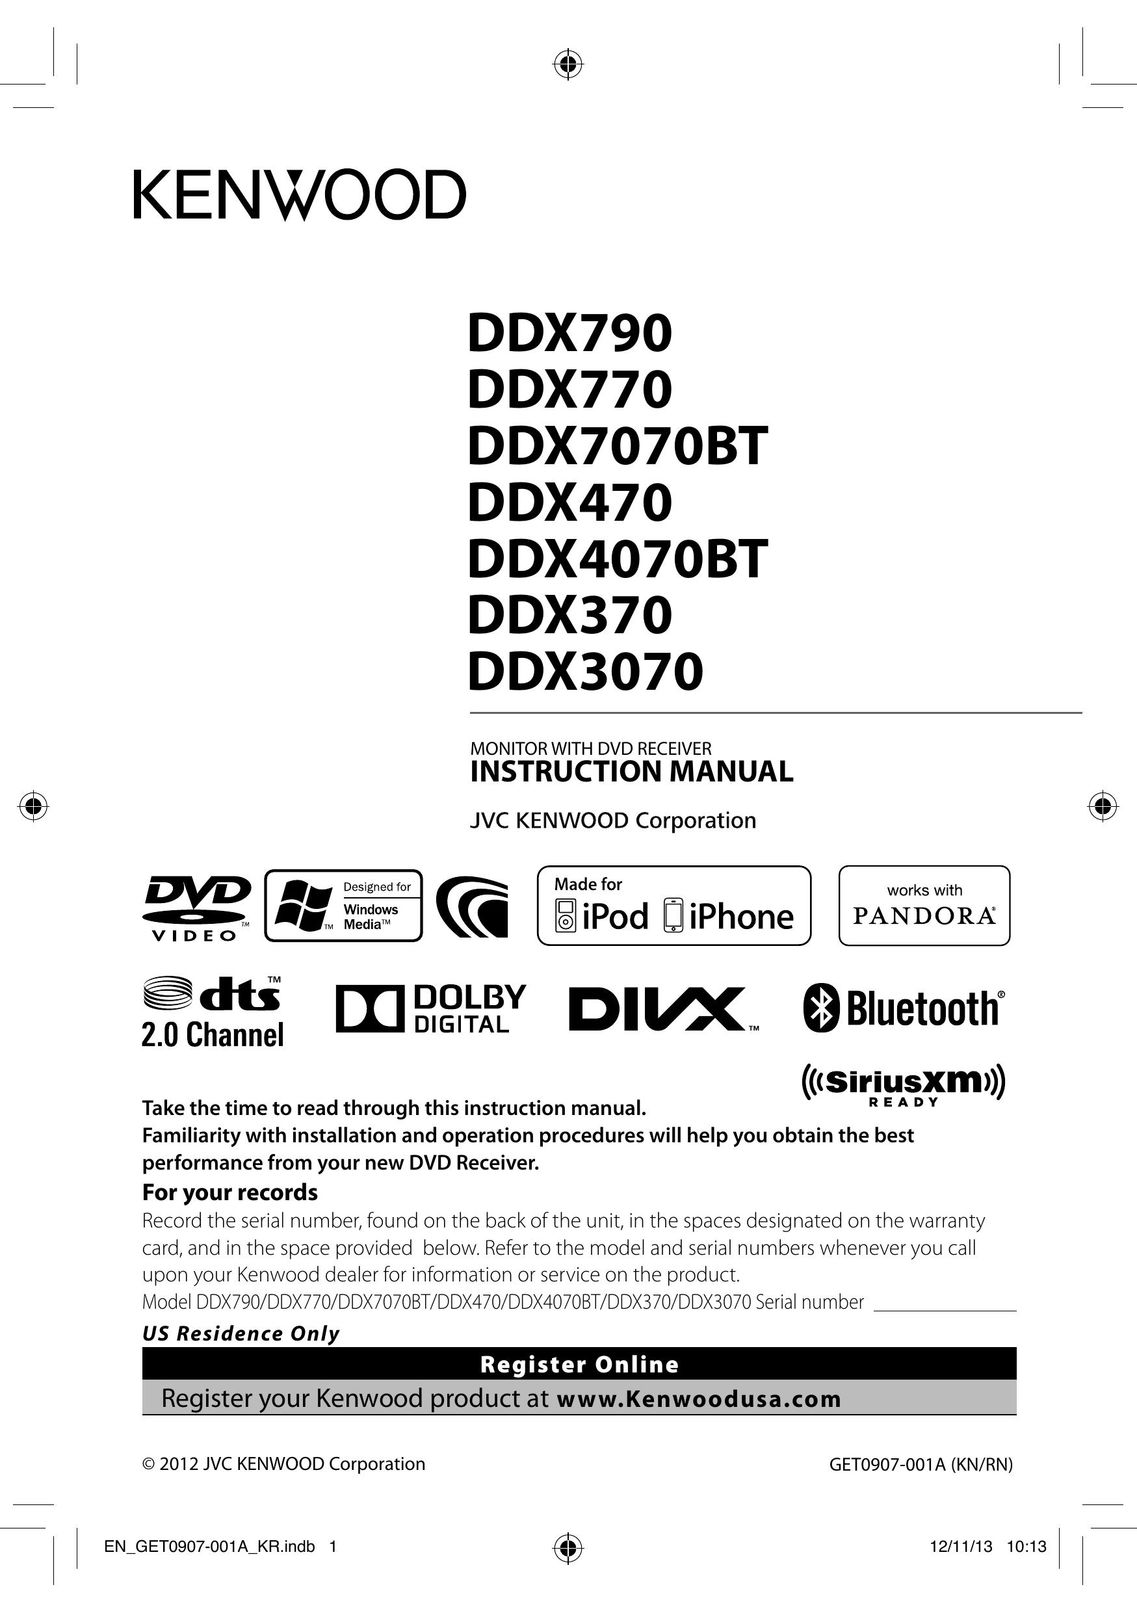 Kenwood DDX7070BT Computer Monitor User Manual